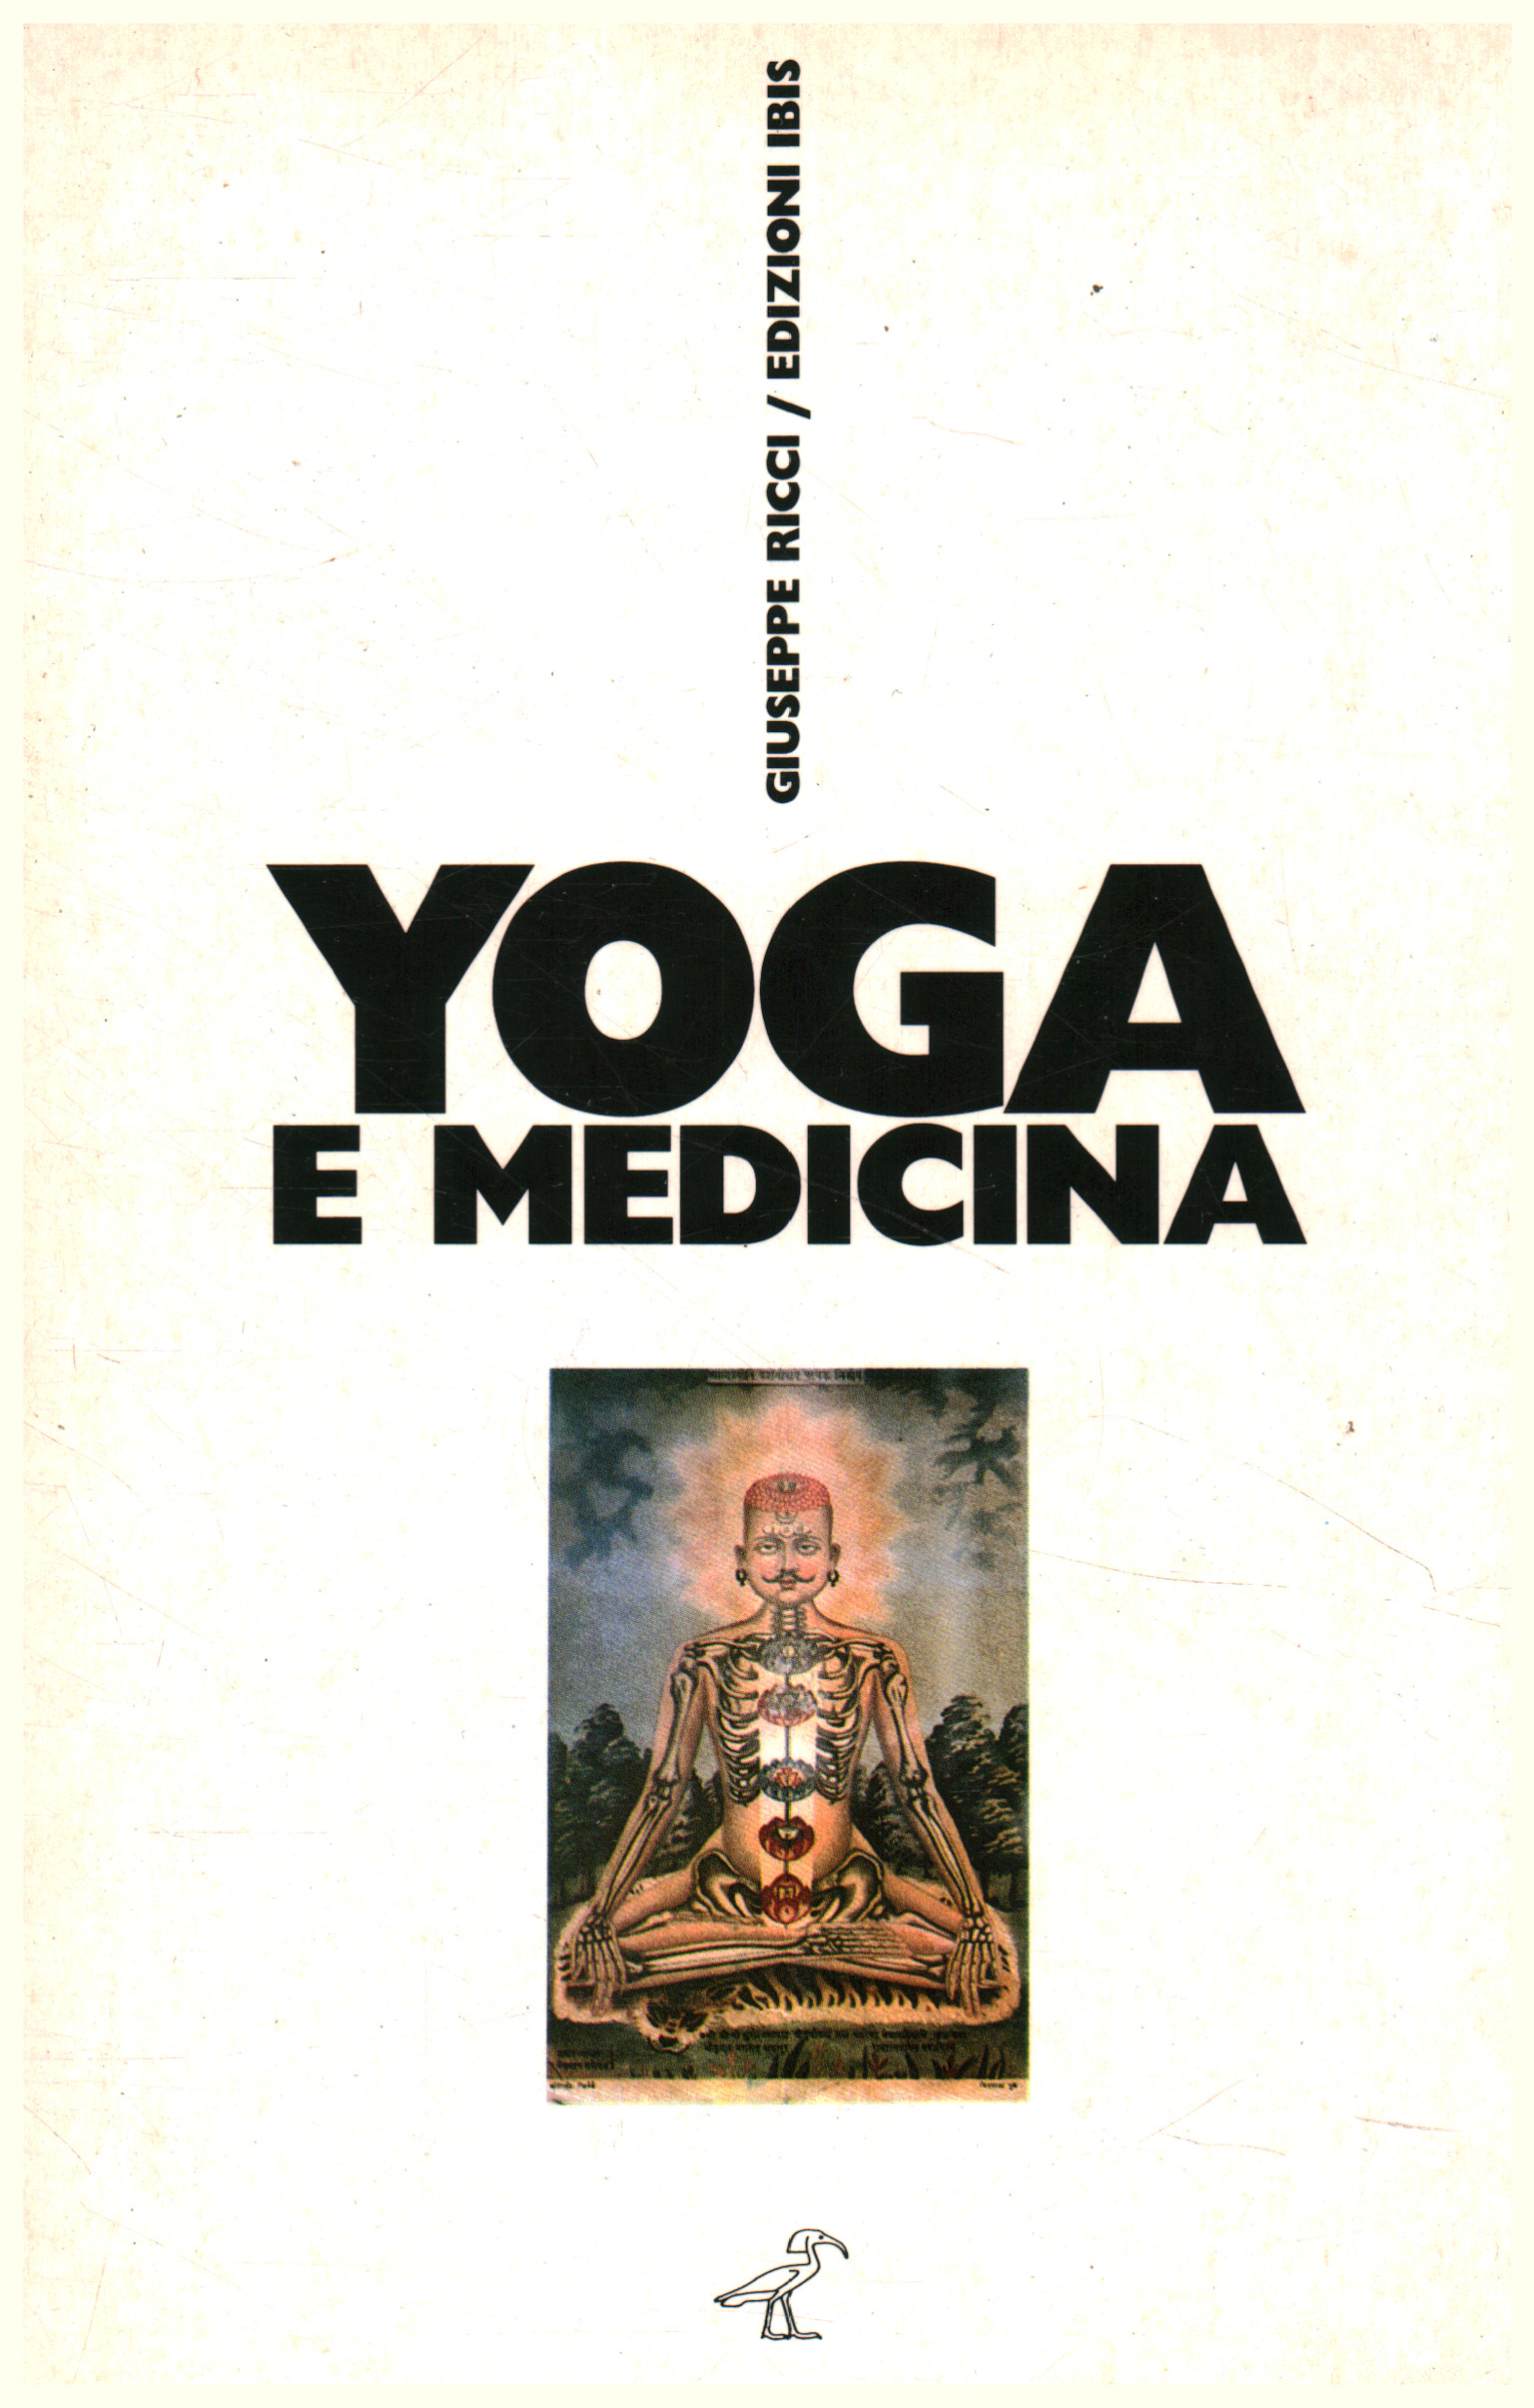 Yoga and medicine